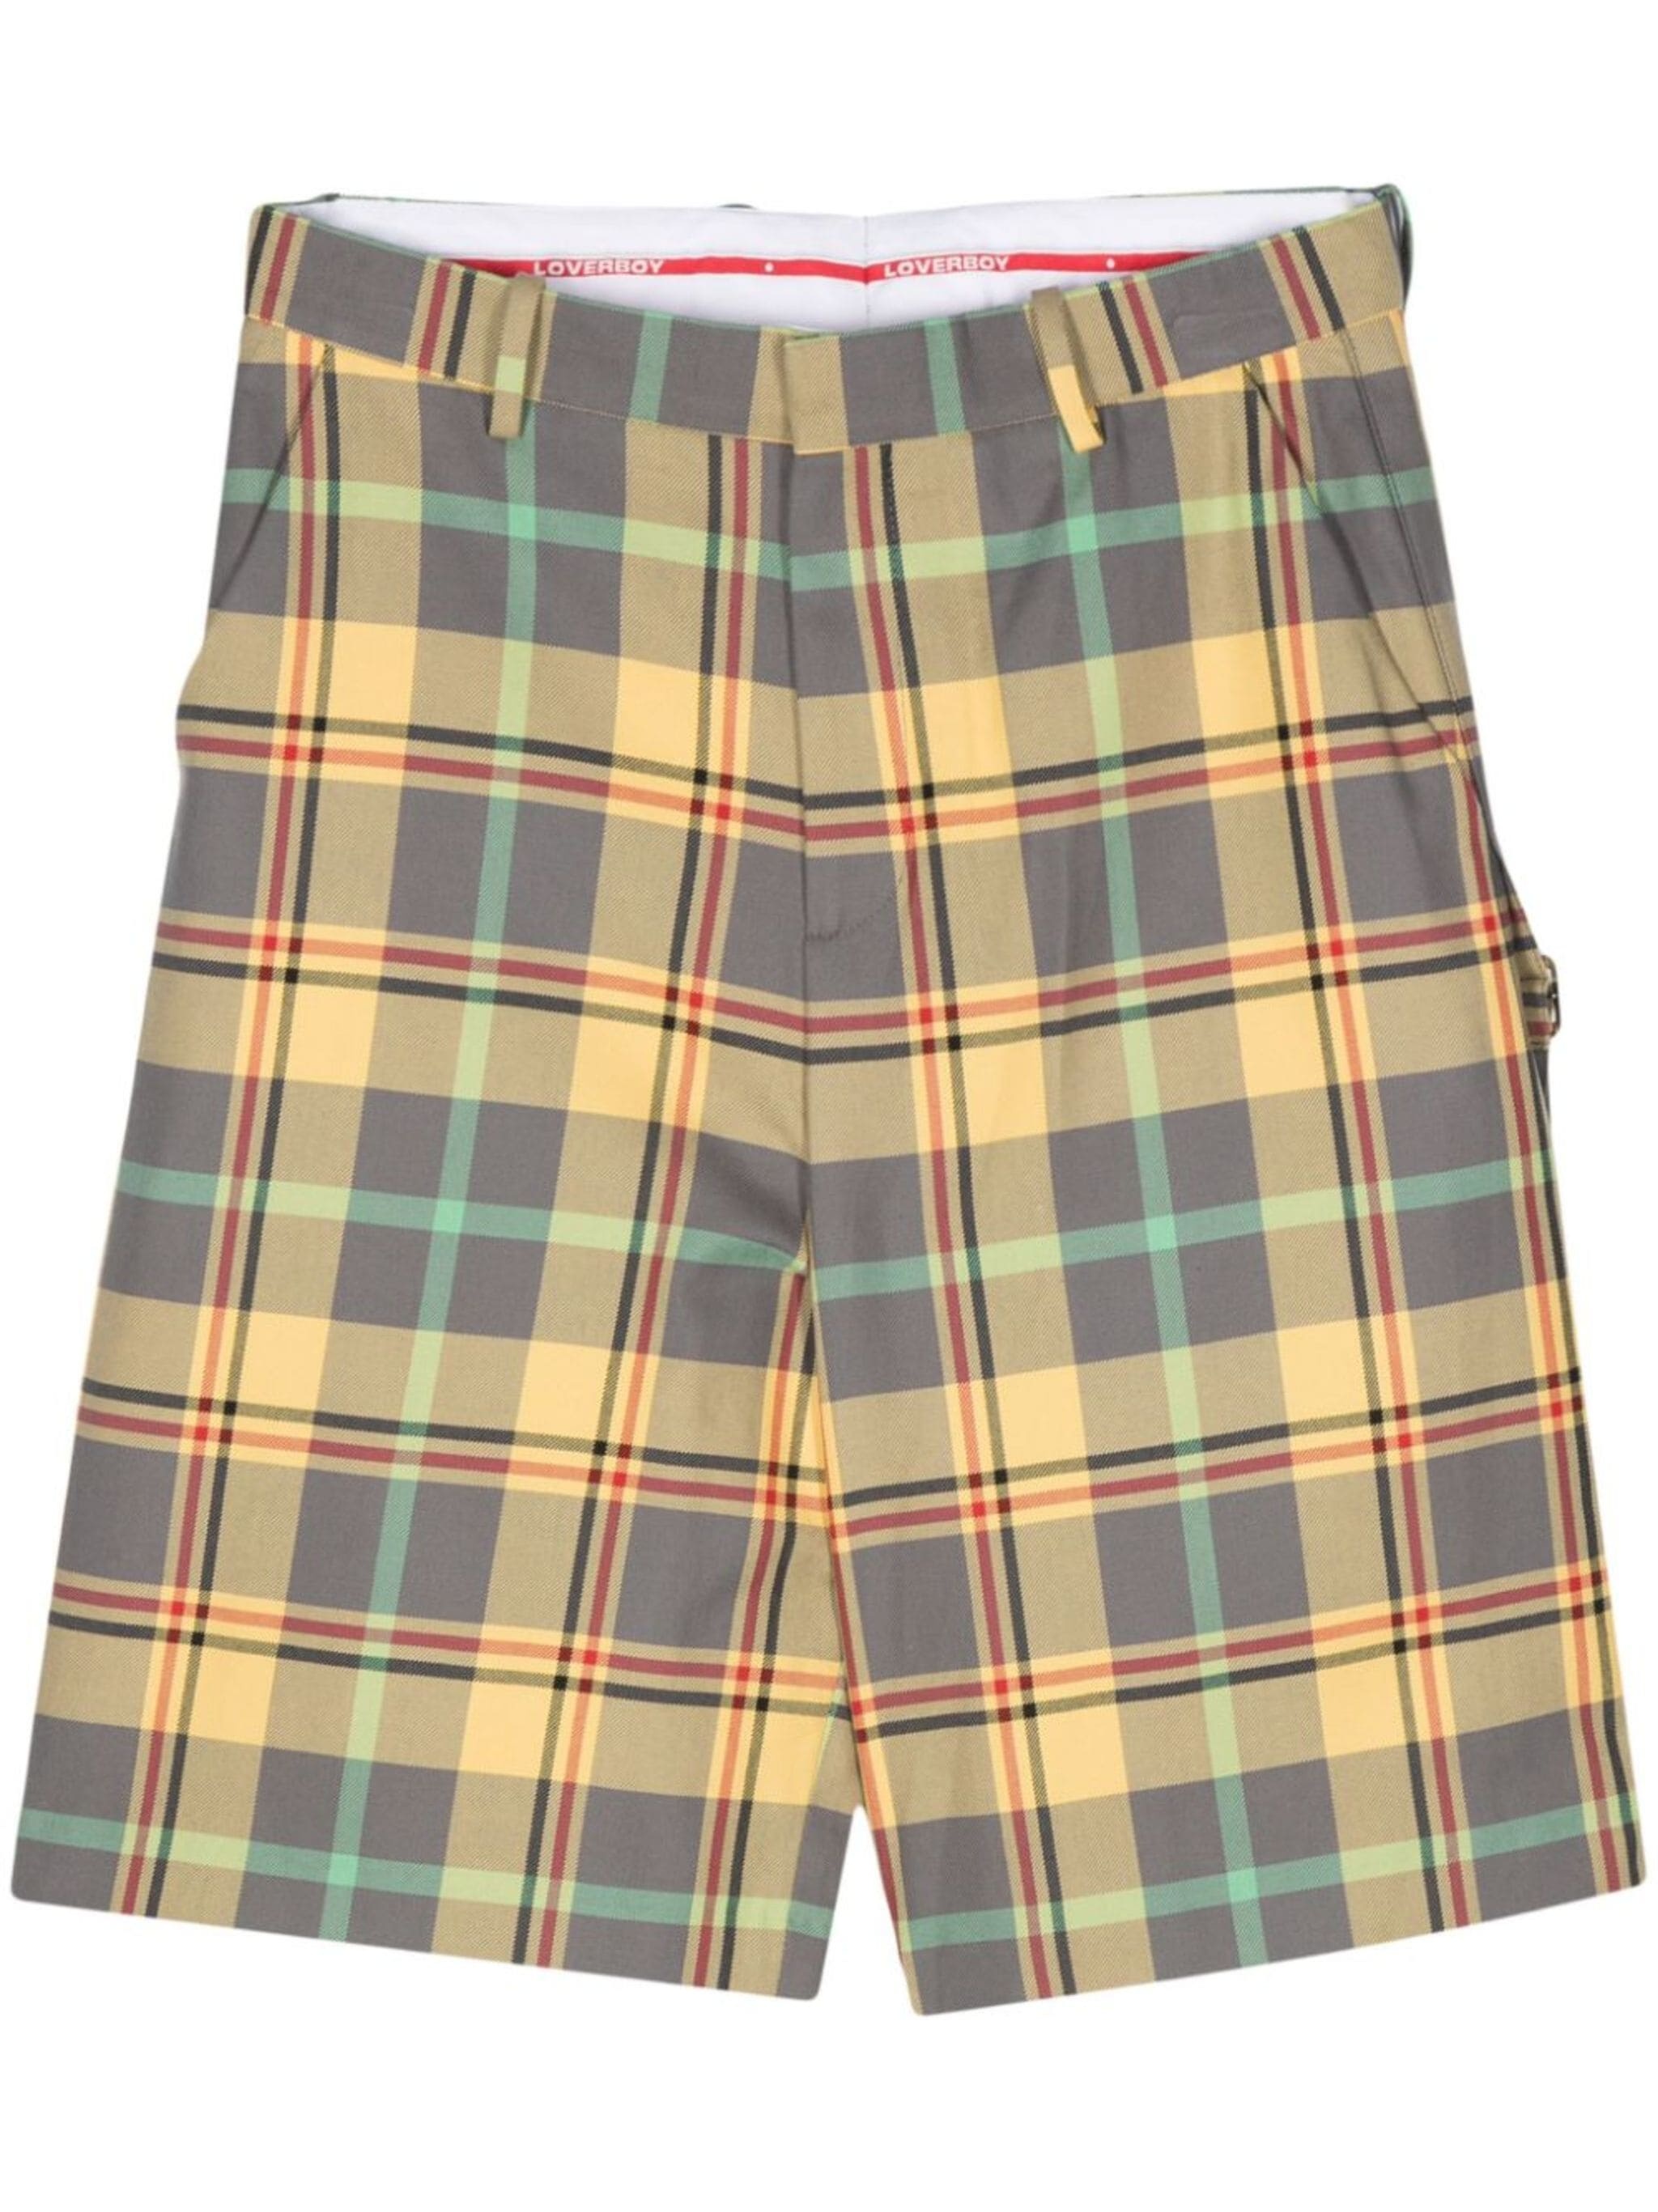 Glasgow cotton shorts - 1